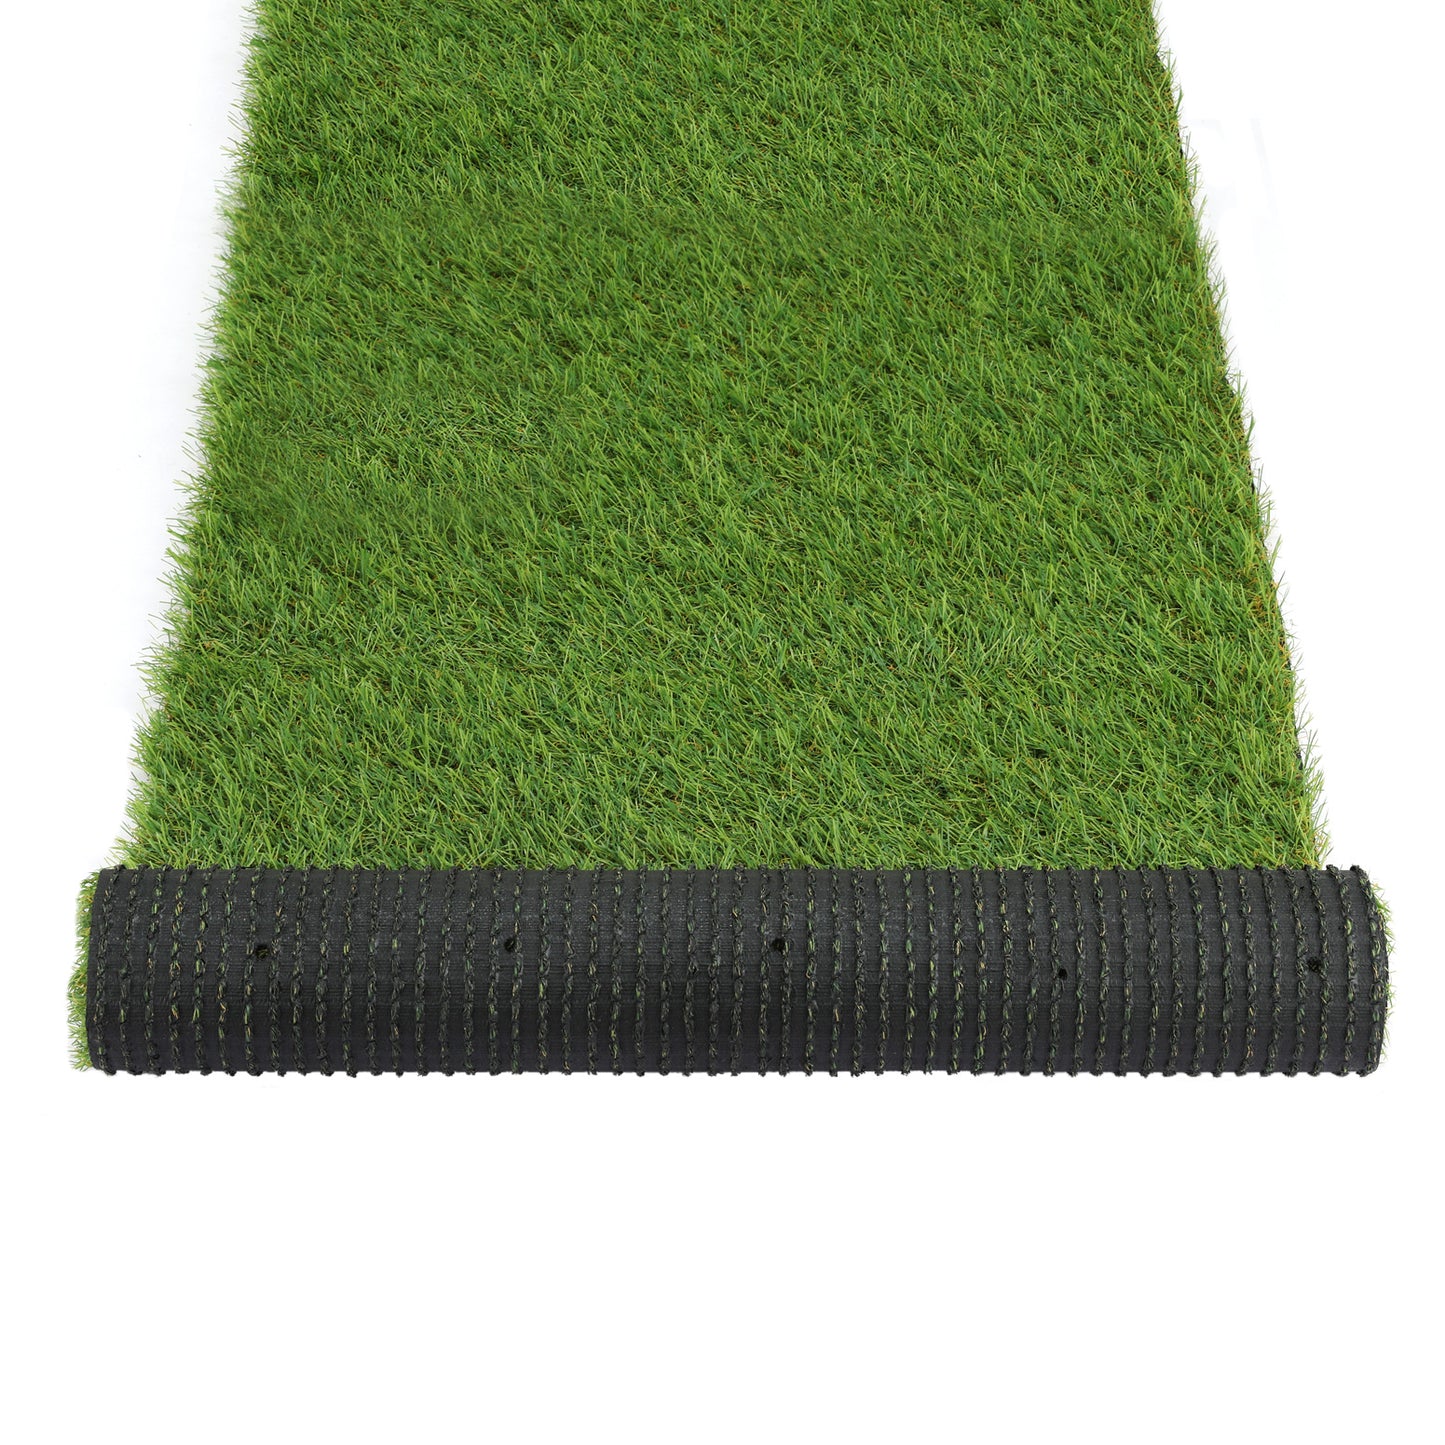 Primeturf Artificial Grass 30mm 2mx5m 60SQM Synthetic Fake Lawn Turf Plastic Plant 4-coloured